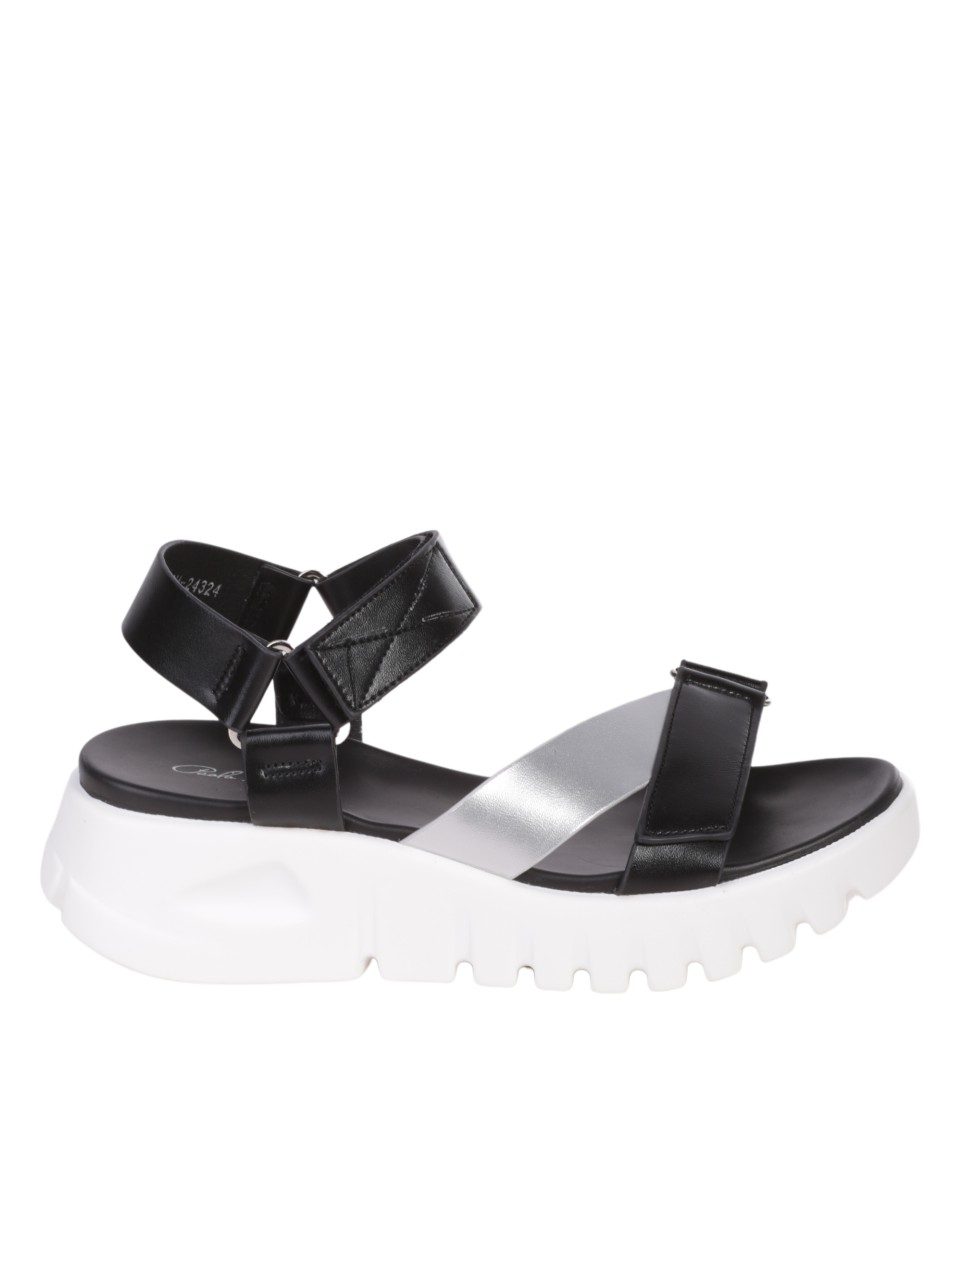 Ежедневни дамски сандали на платформа в черен/златист цвят 4H-24324 black/silver